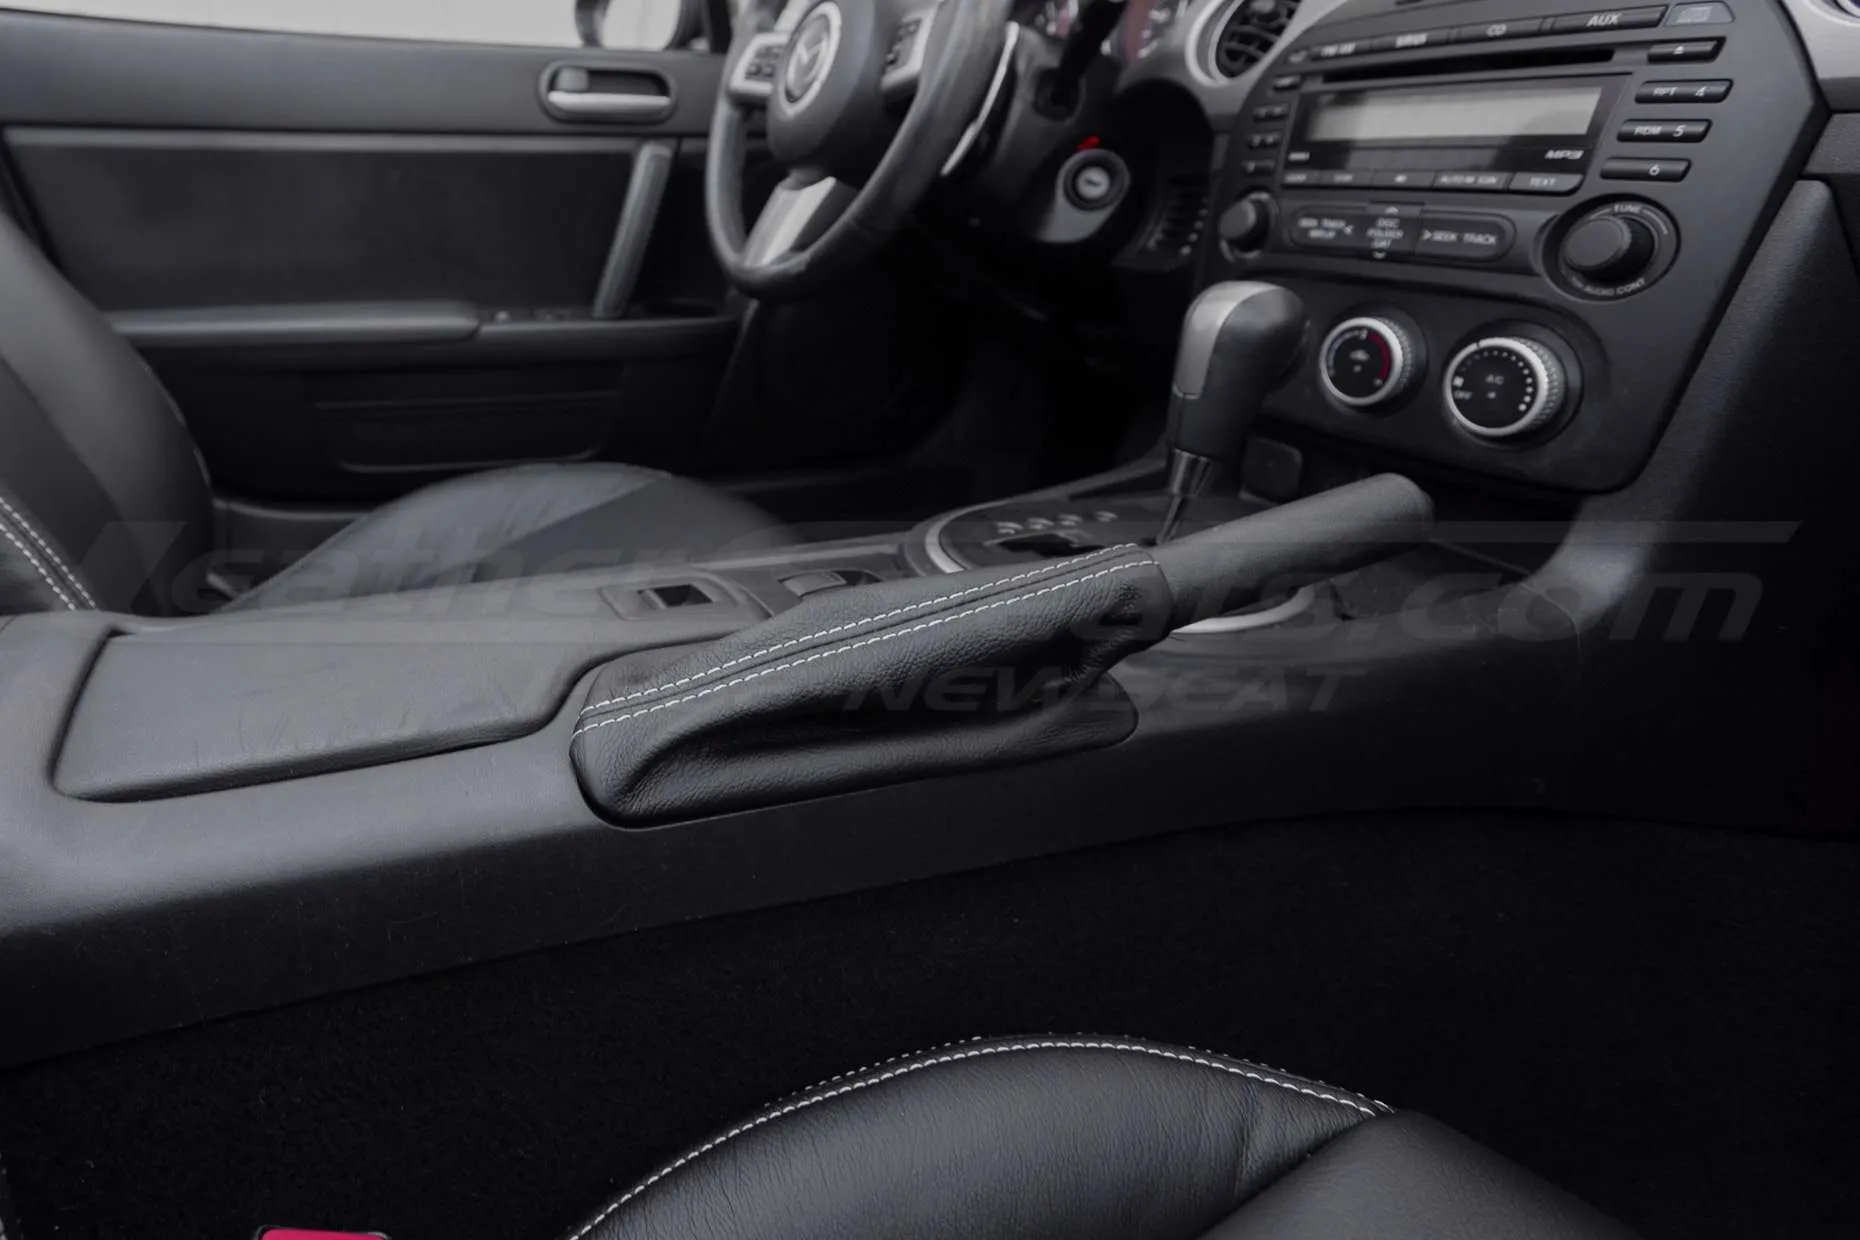 Black leather Mazda Miata hand brake upholstery with contrasting White stitching